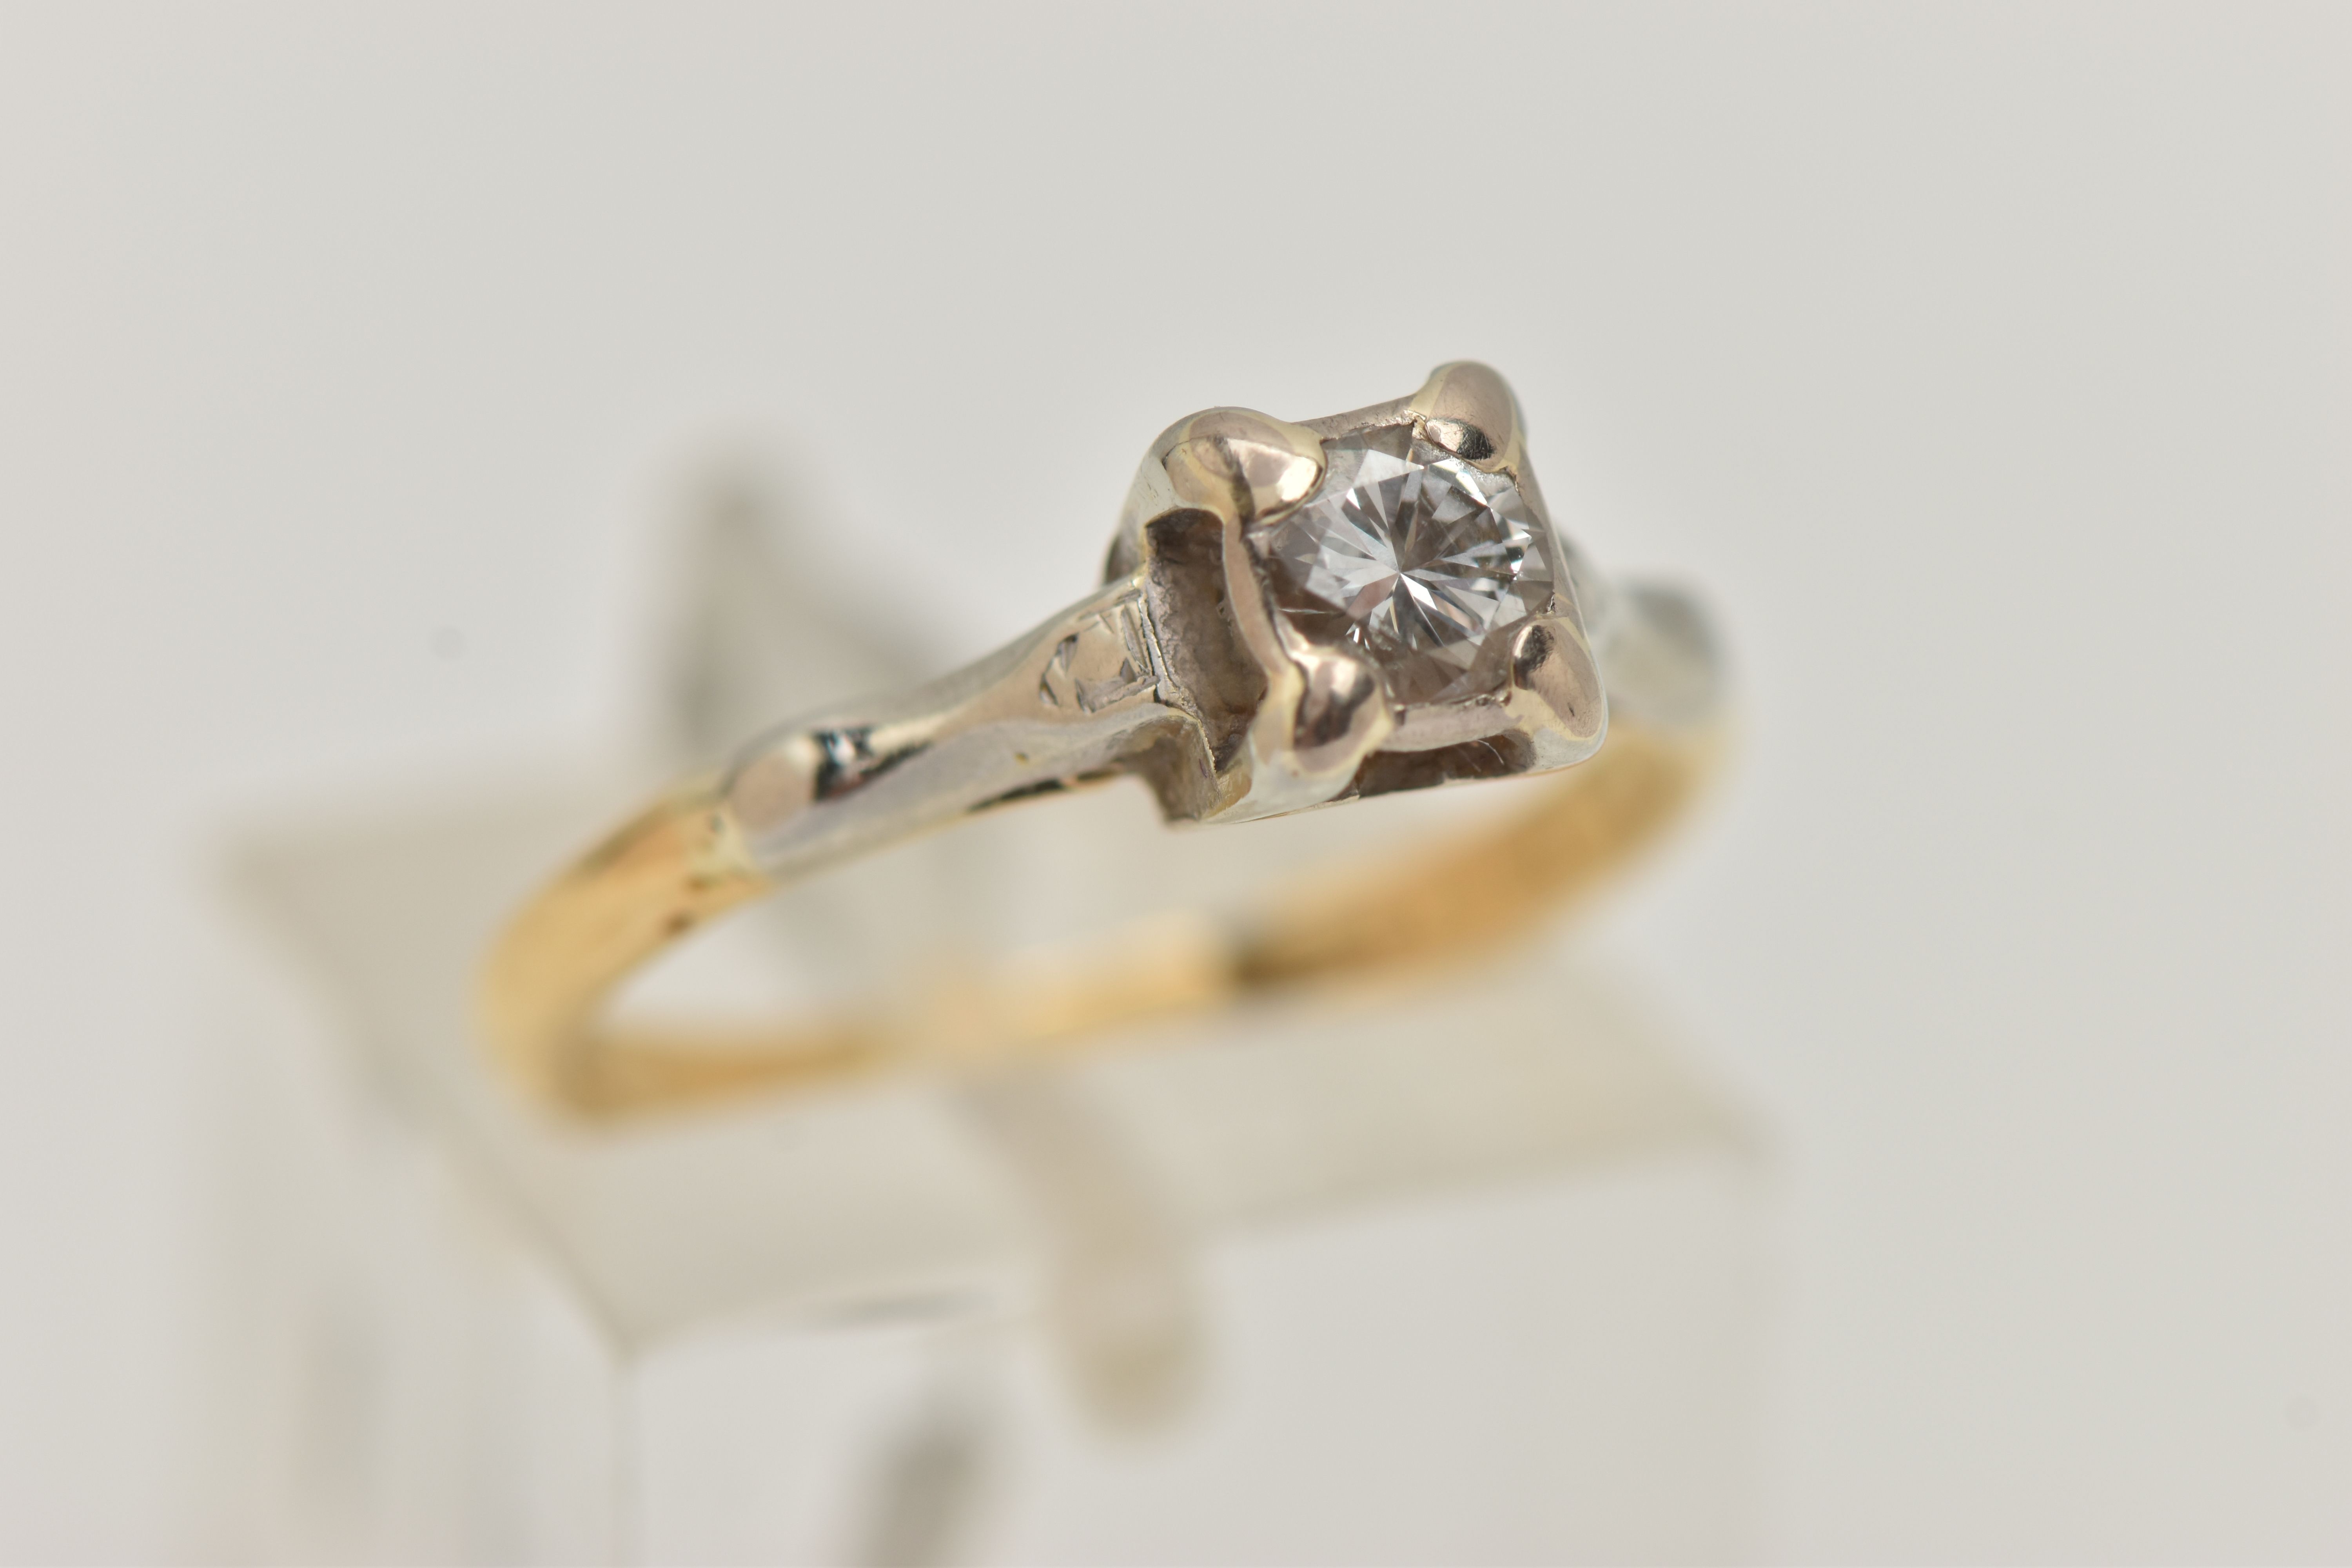 AN 18CT GOLD DIAMOND SINGLE STONE RING, round brilliant cut diamond, claw rub over setting, - Image 4 of 4